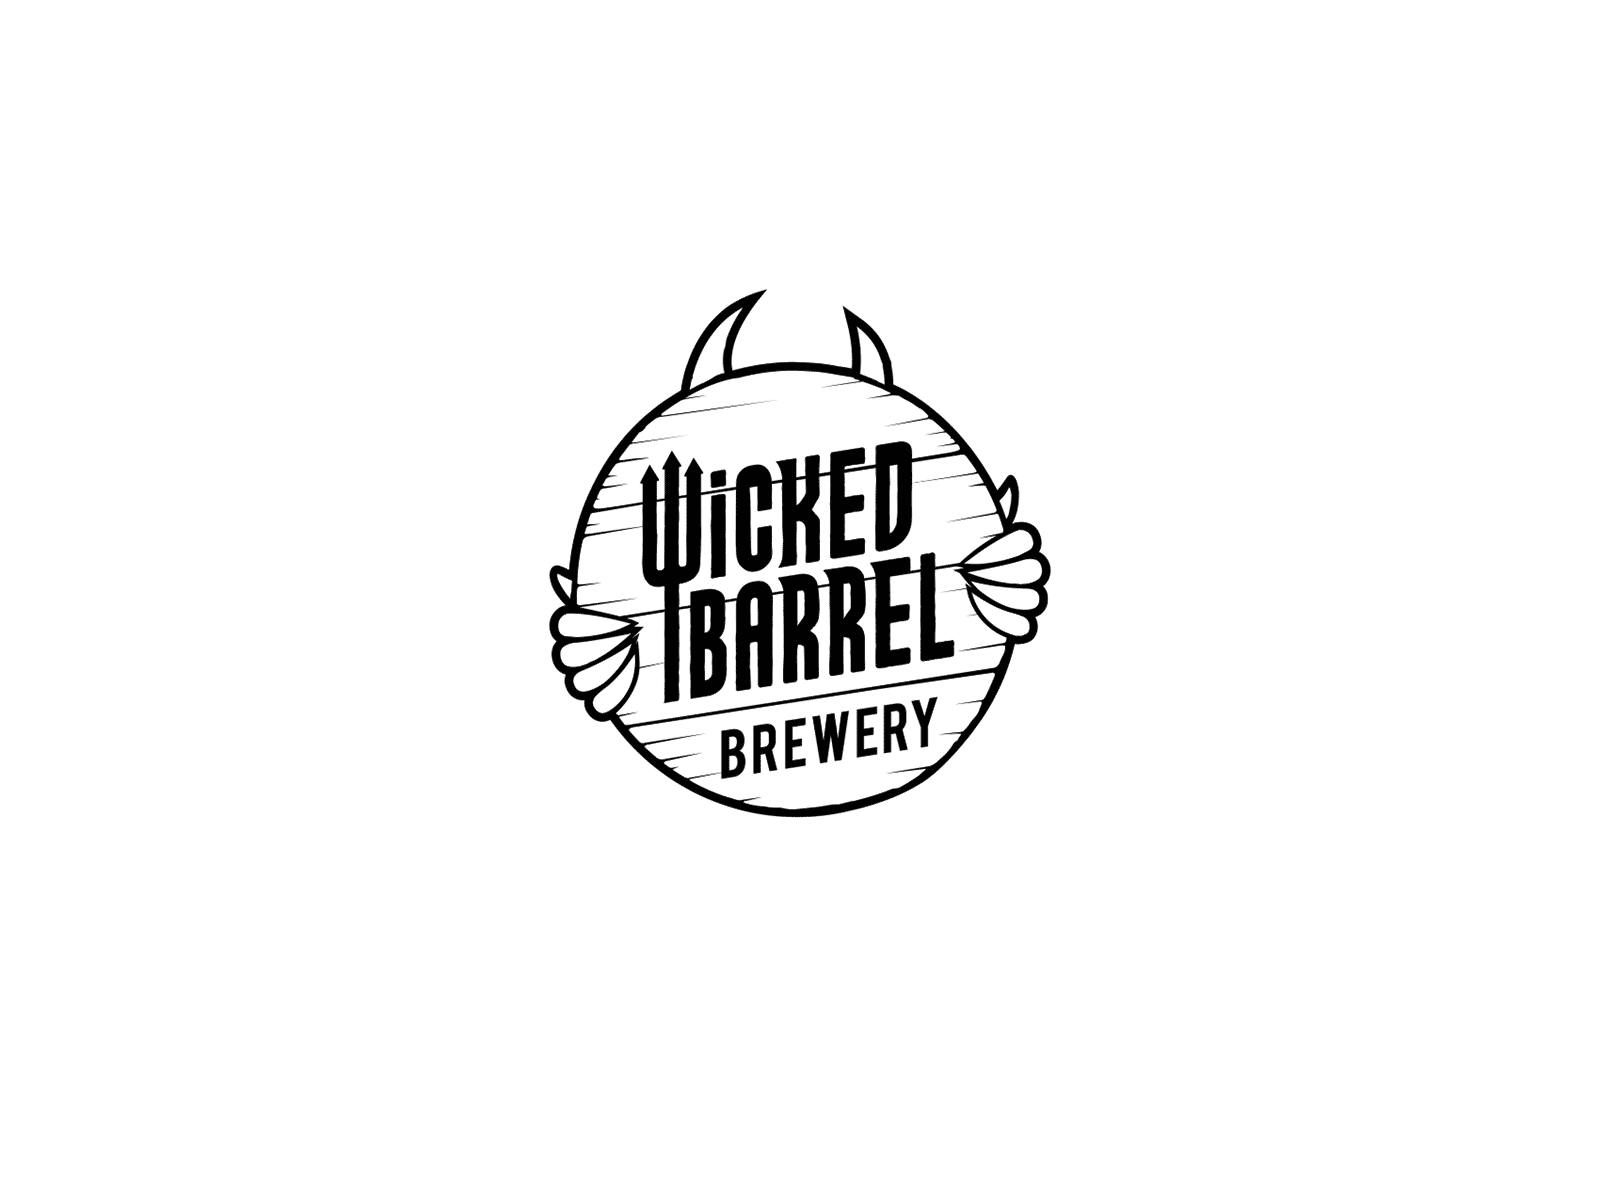 Wicked Barrel Brewery